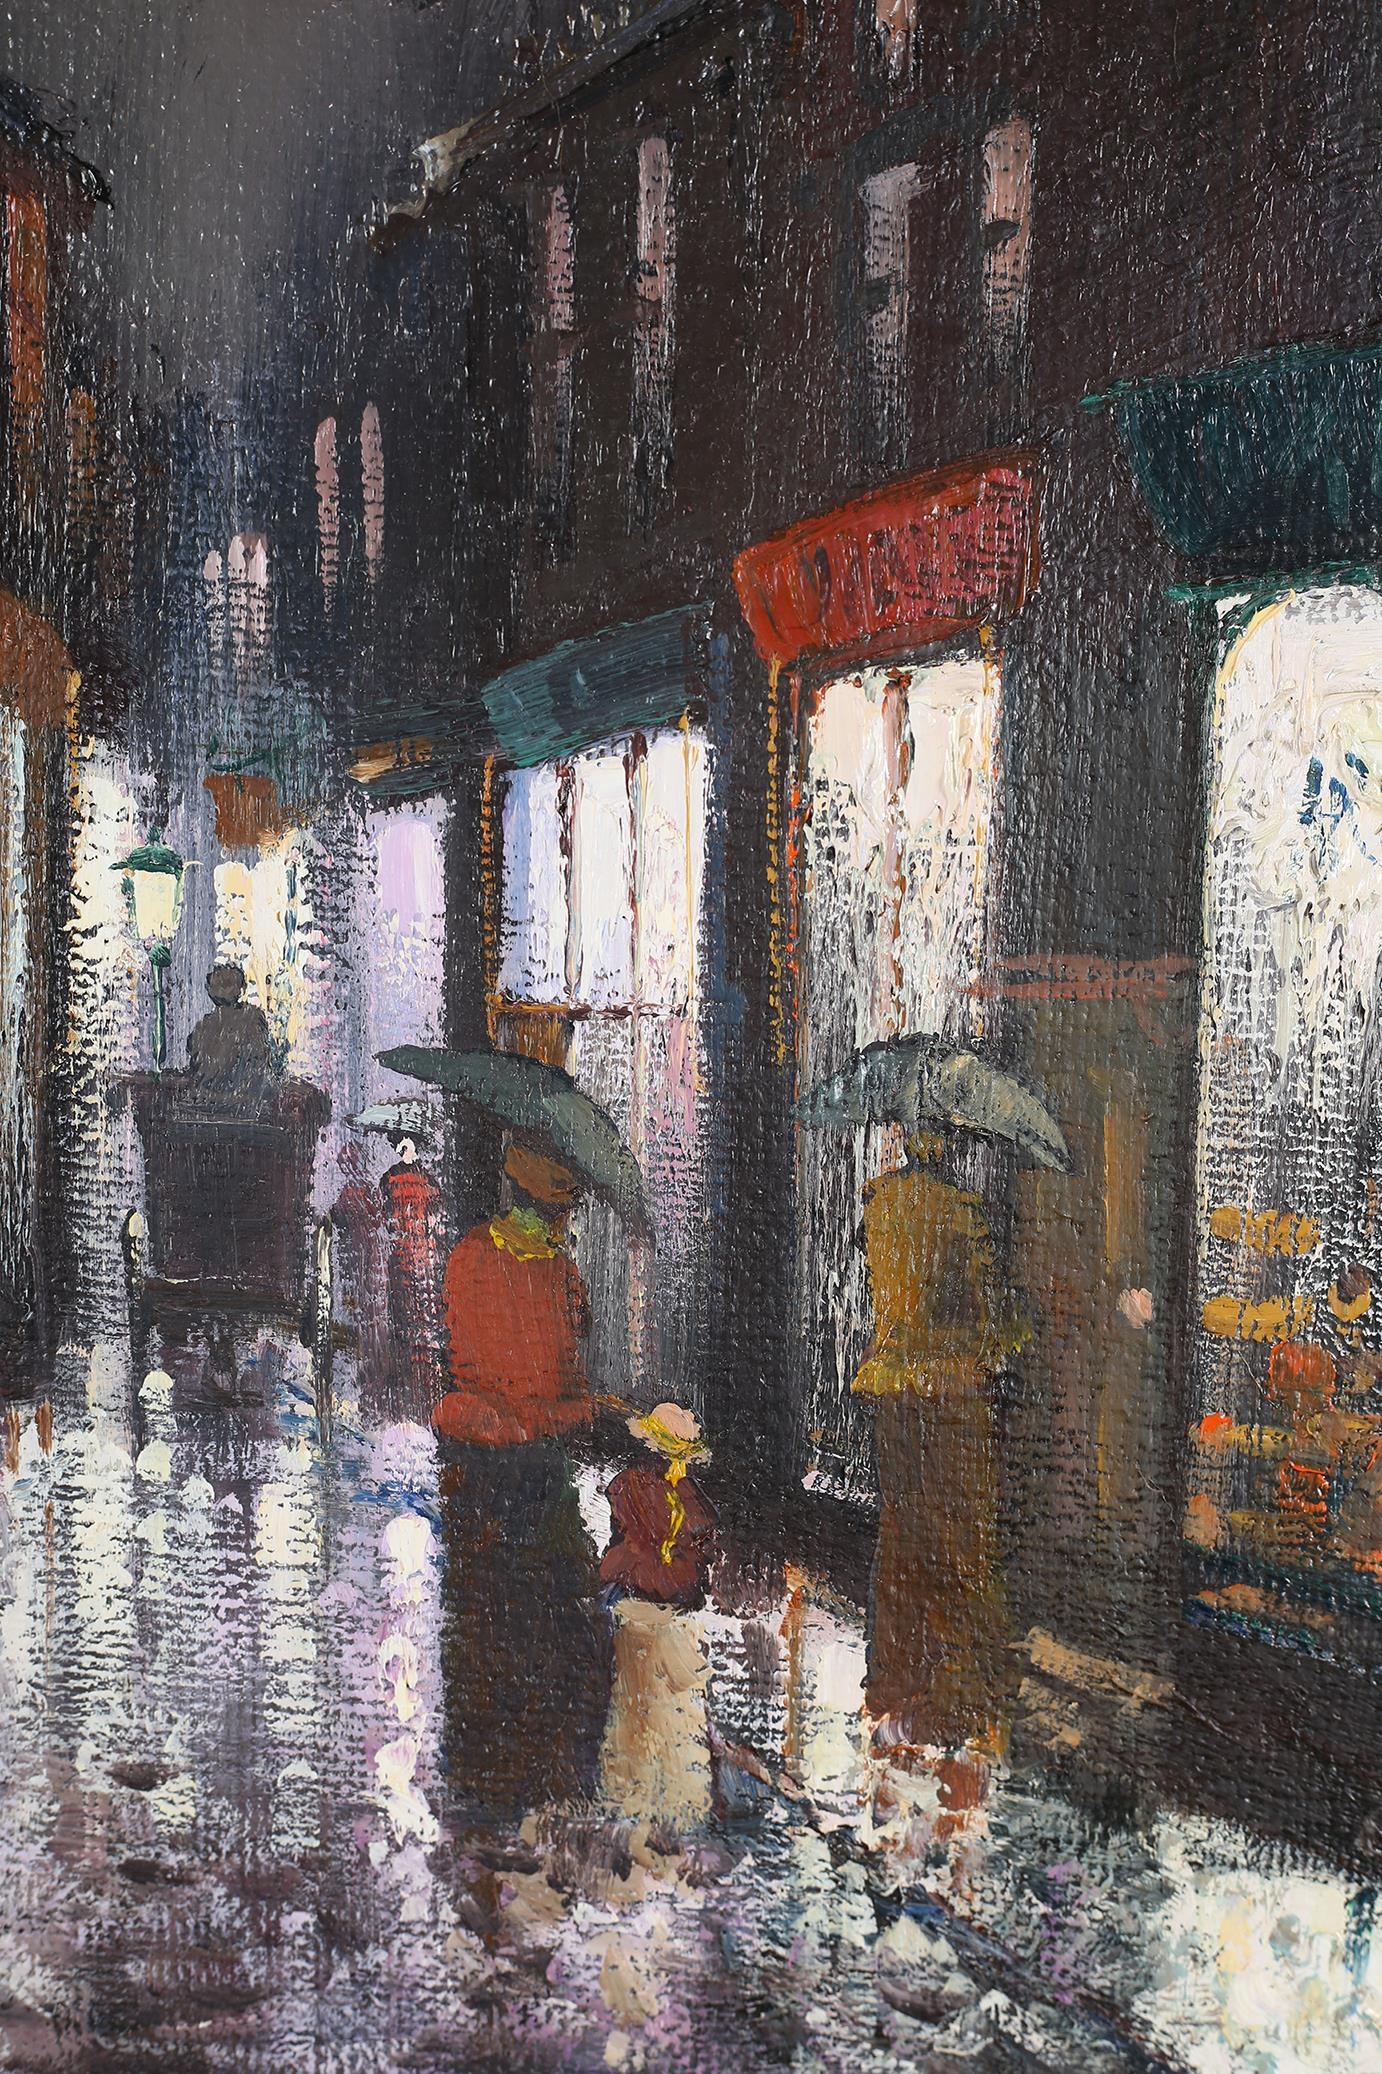 ARR Barry Hilton (b 1941), Edwardian street scene with figures on a rainy night, oil on canvas, - Image 3 of 5